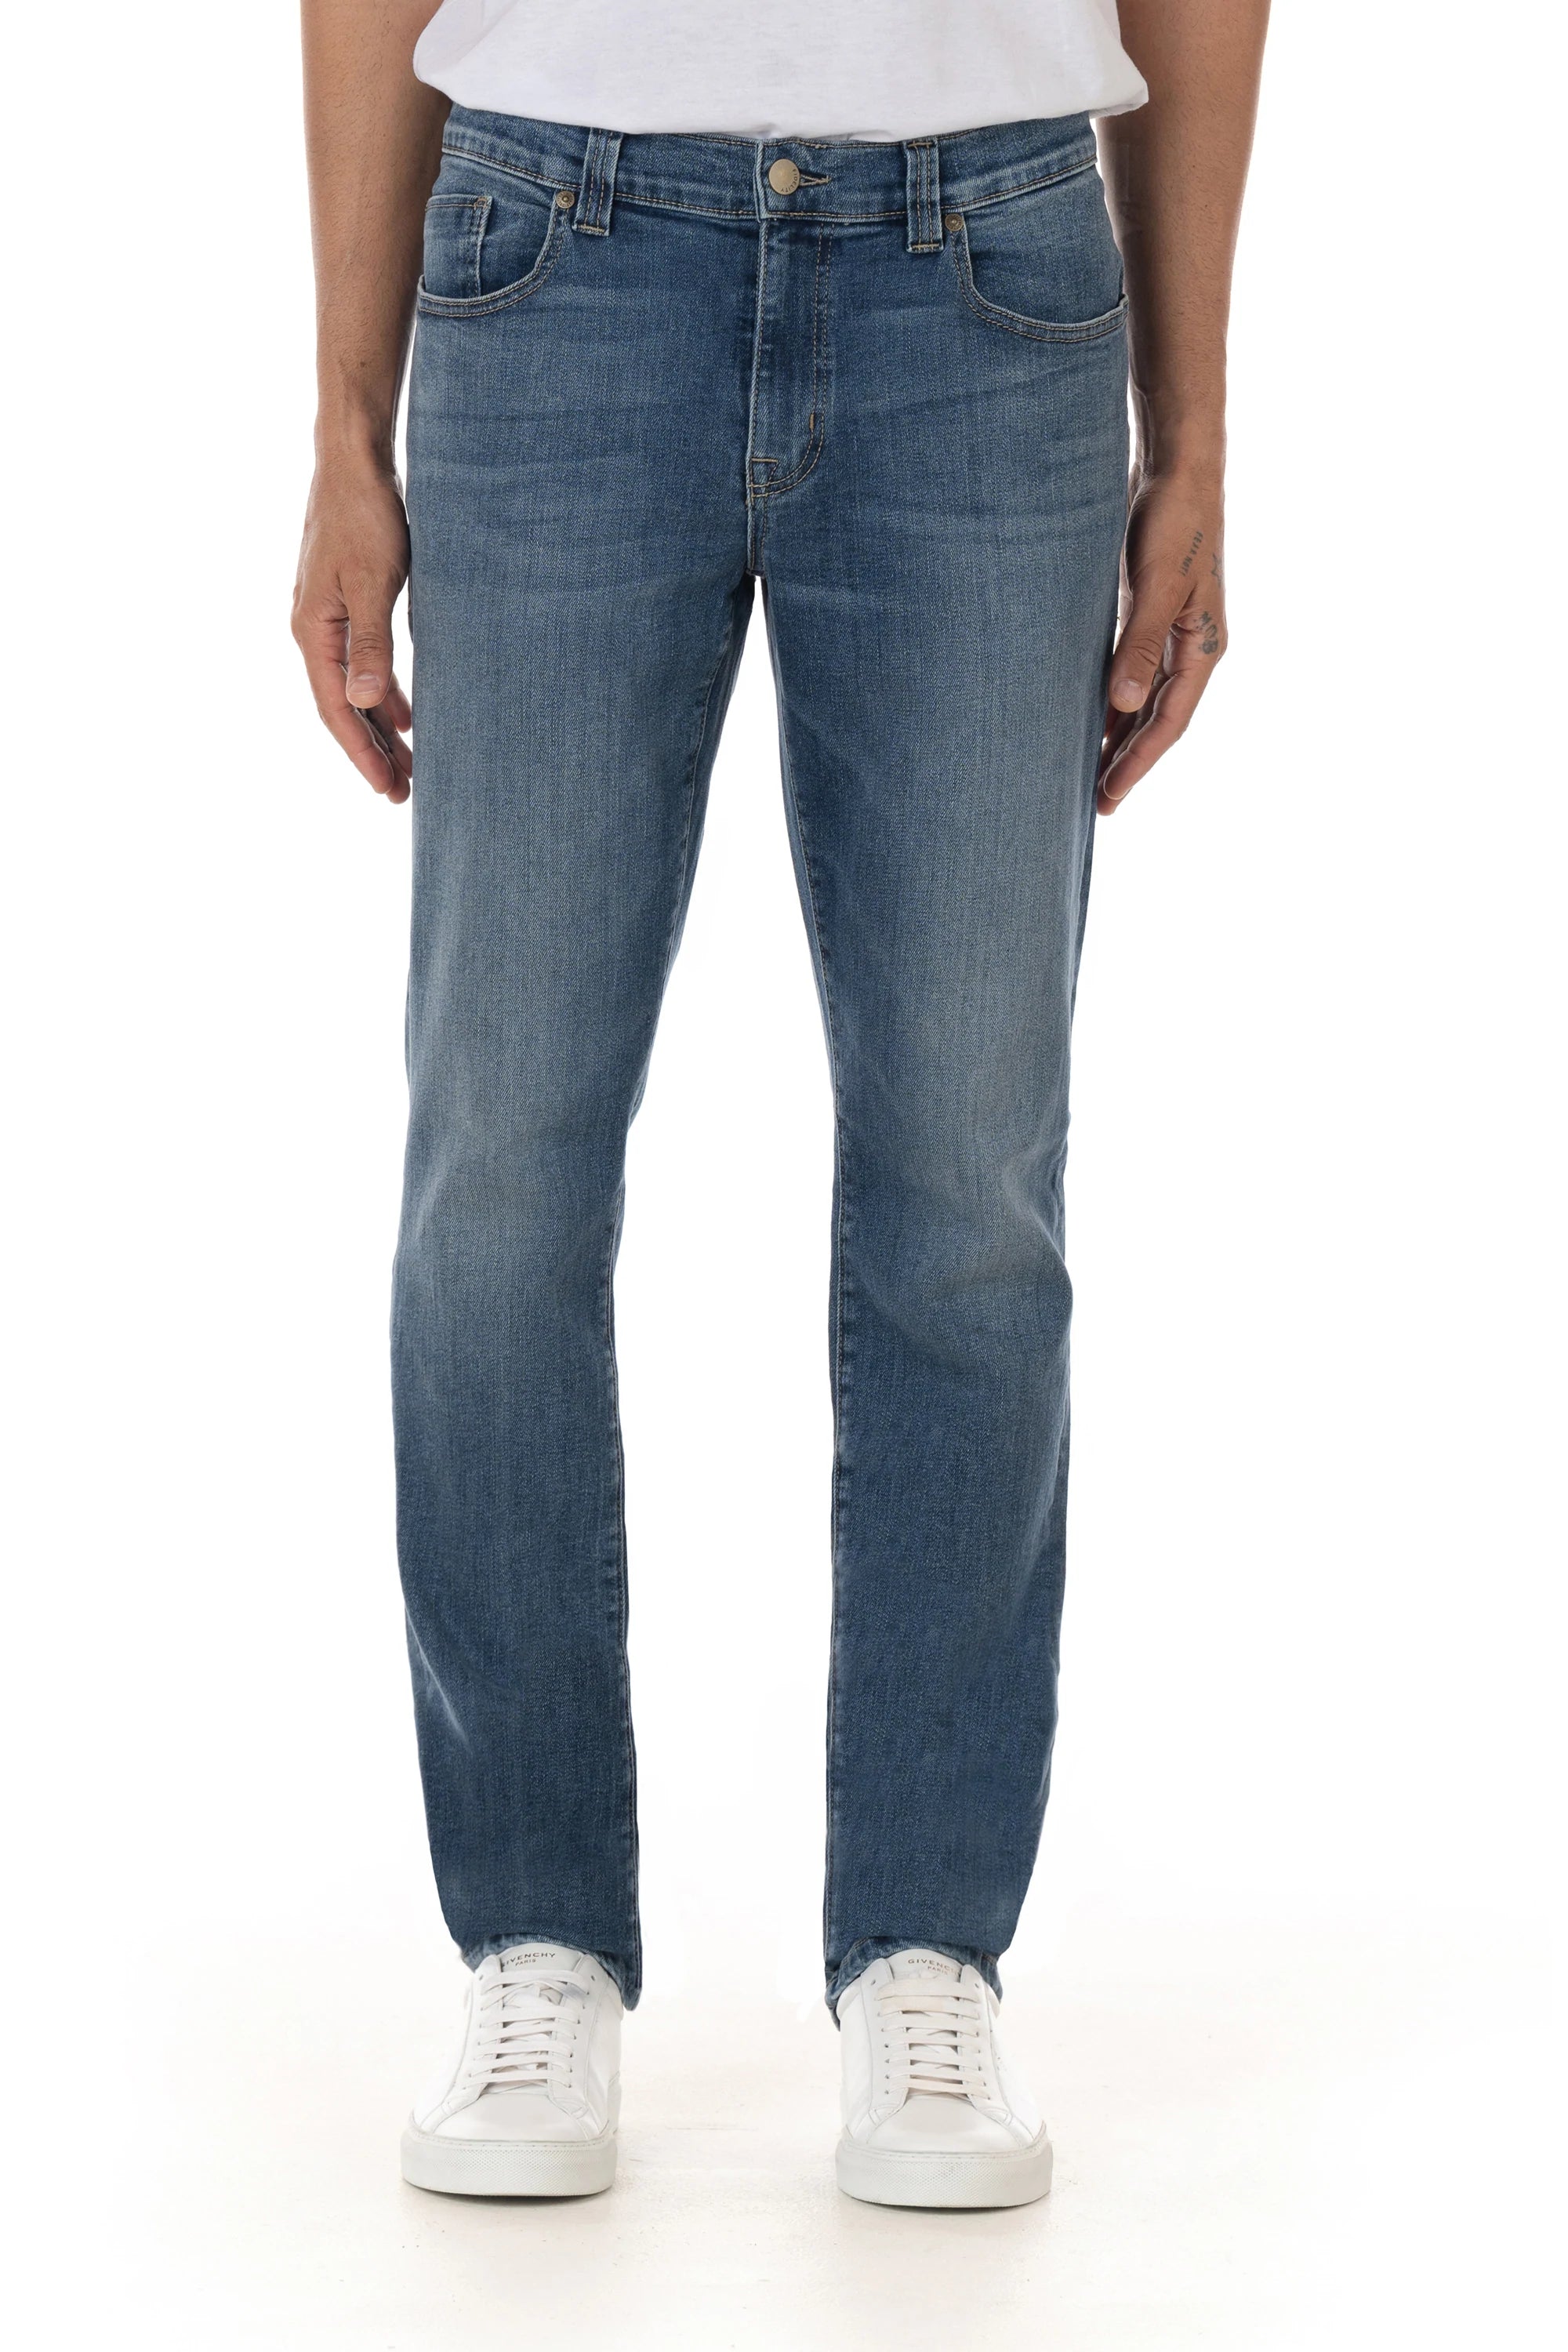 Fidelity Denim Premium Jeans - Q. Contrary